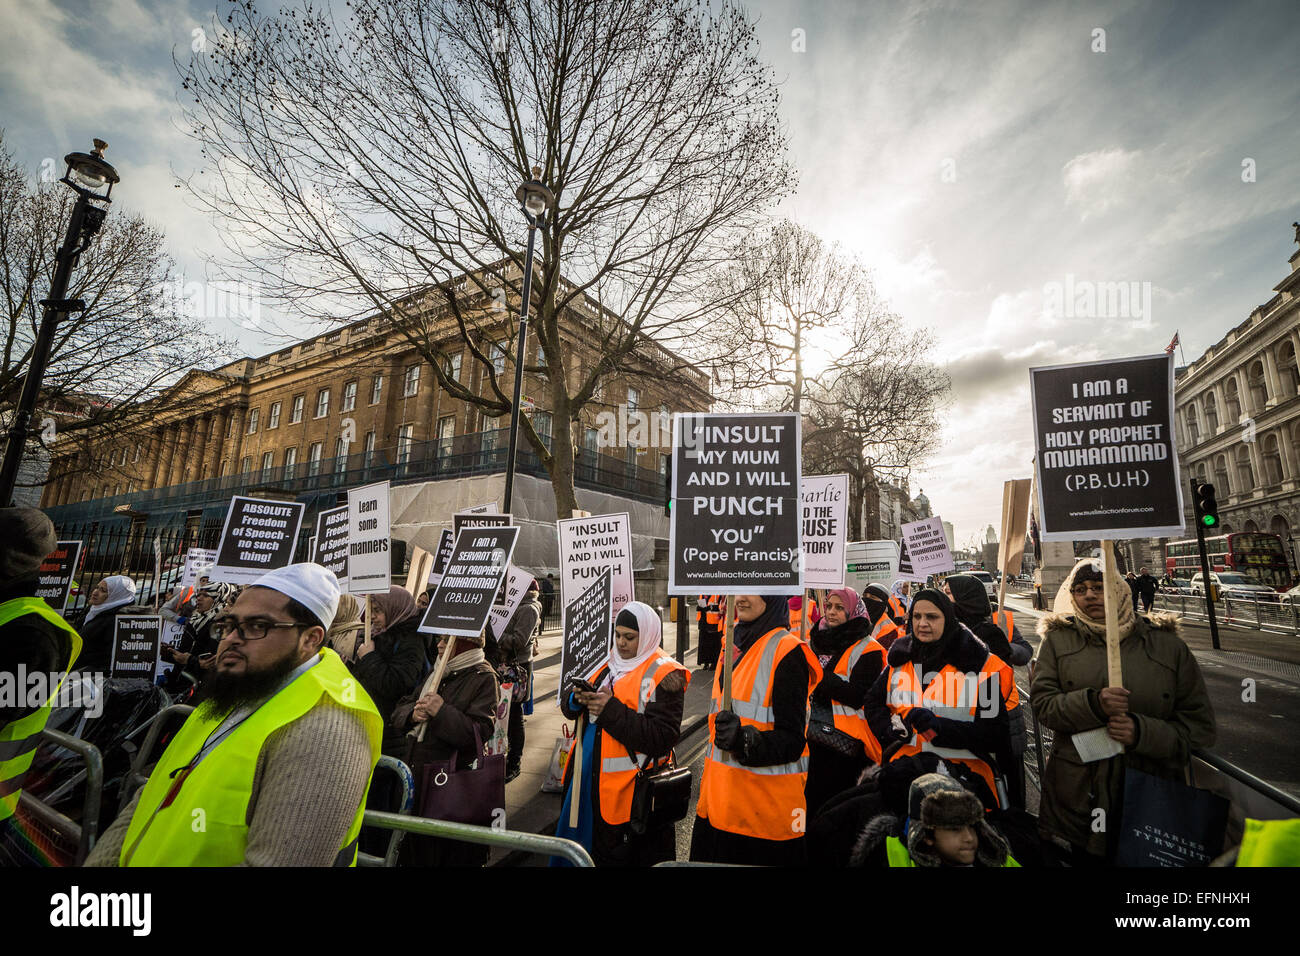 London, UK. 8. Februar 2015. Britische Muslime protestieren gegen Charlie Hebdo erneuten Veröffentlichung Credit: Guy Corbishley/Alamy Live News Stockfoto